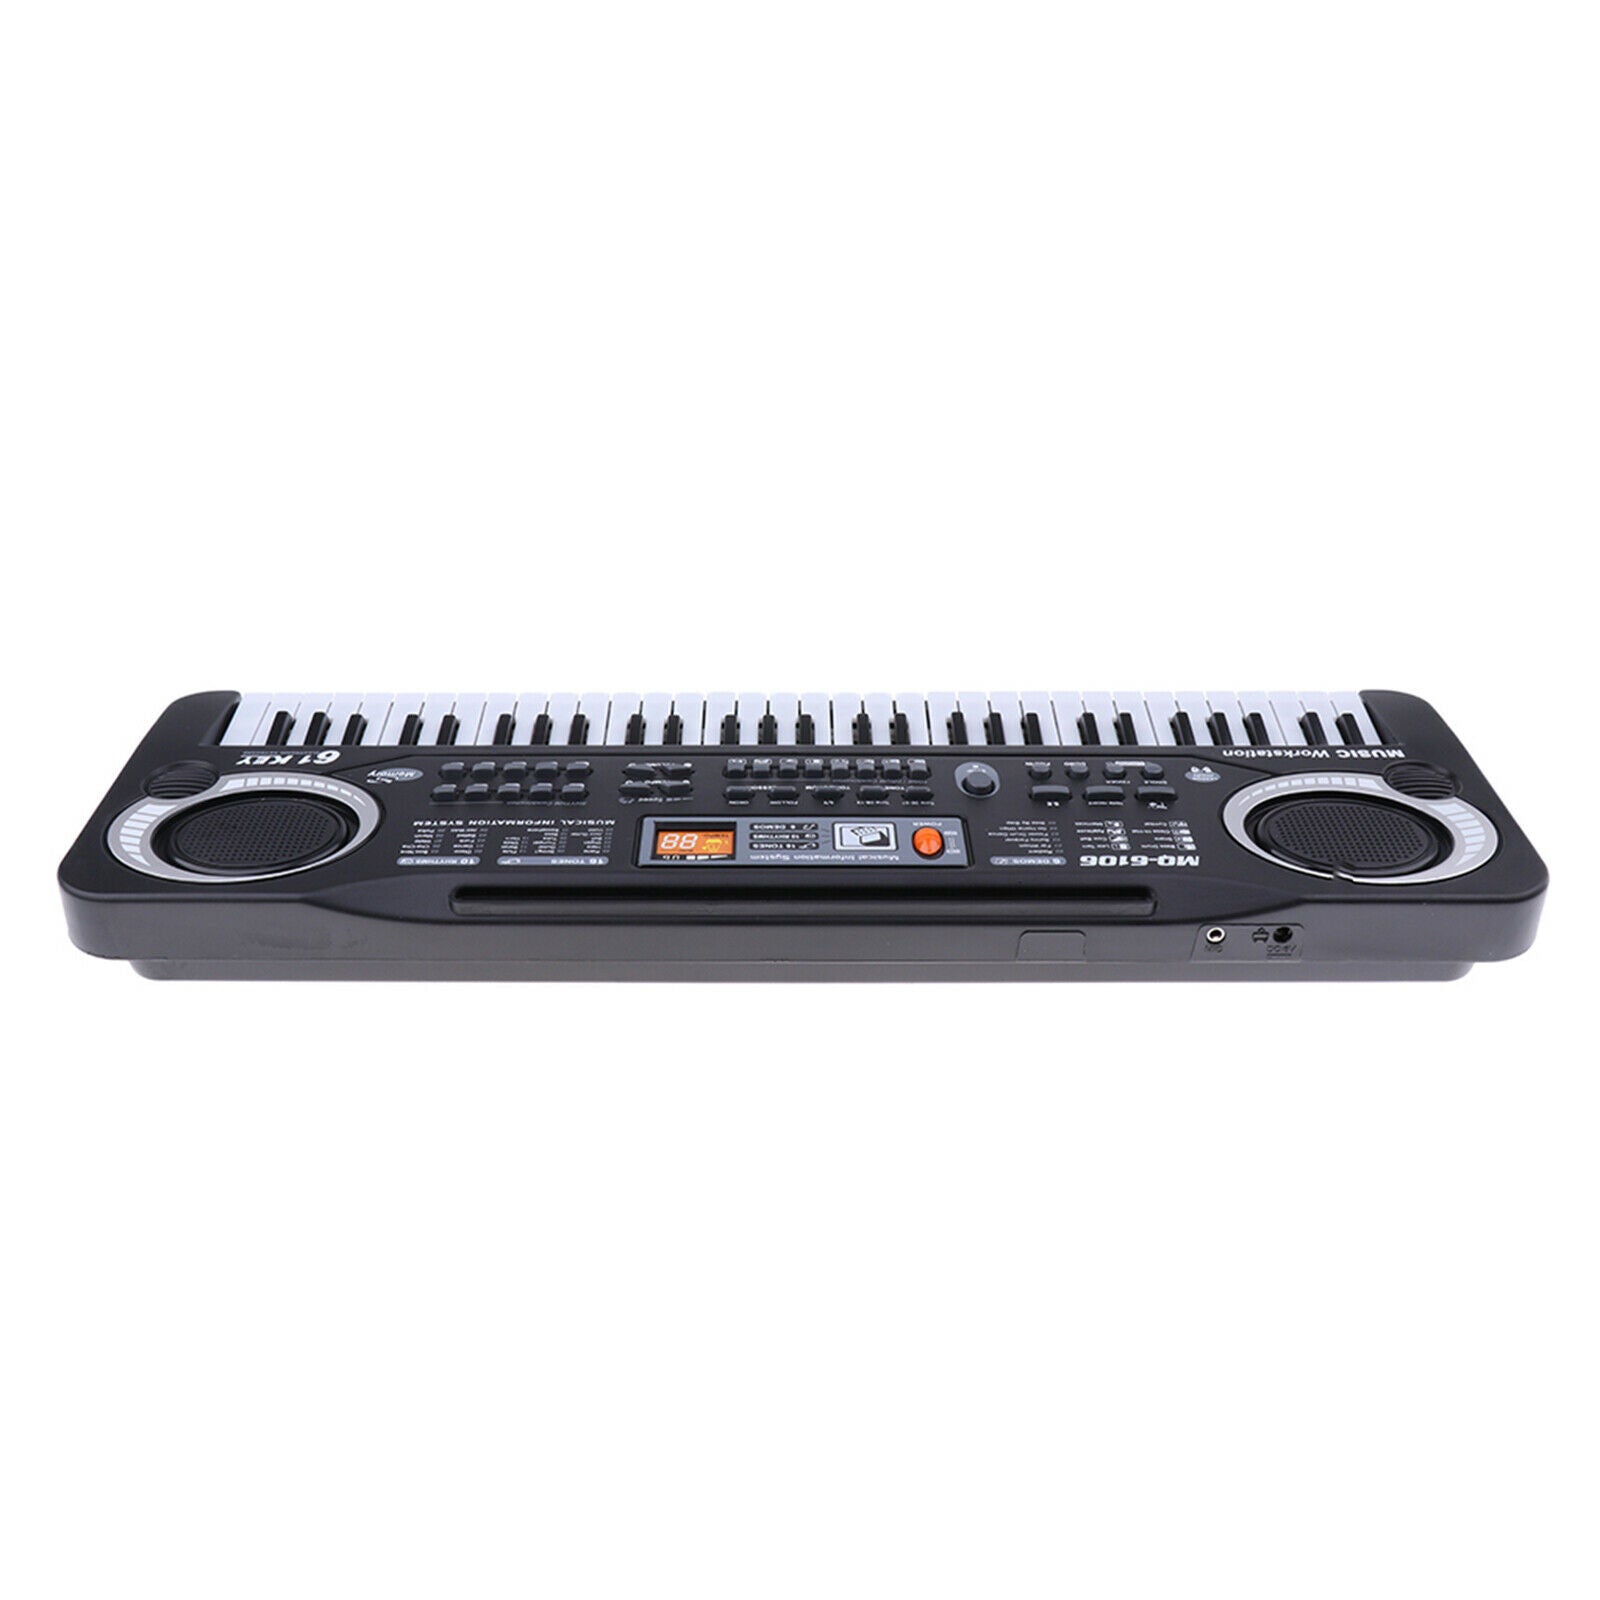 Piano Keyboard 61 Key Electronic Keyboard USB Powered for beginner